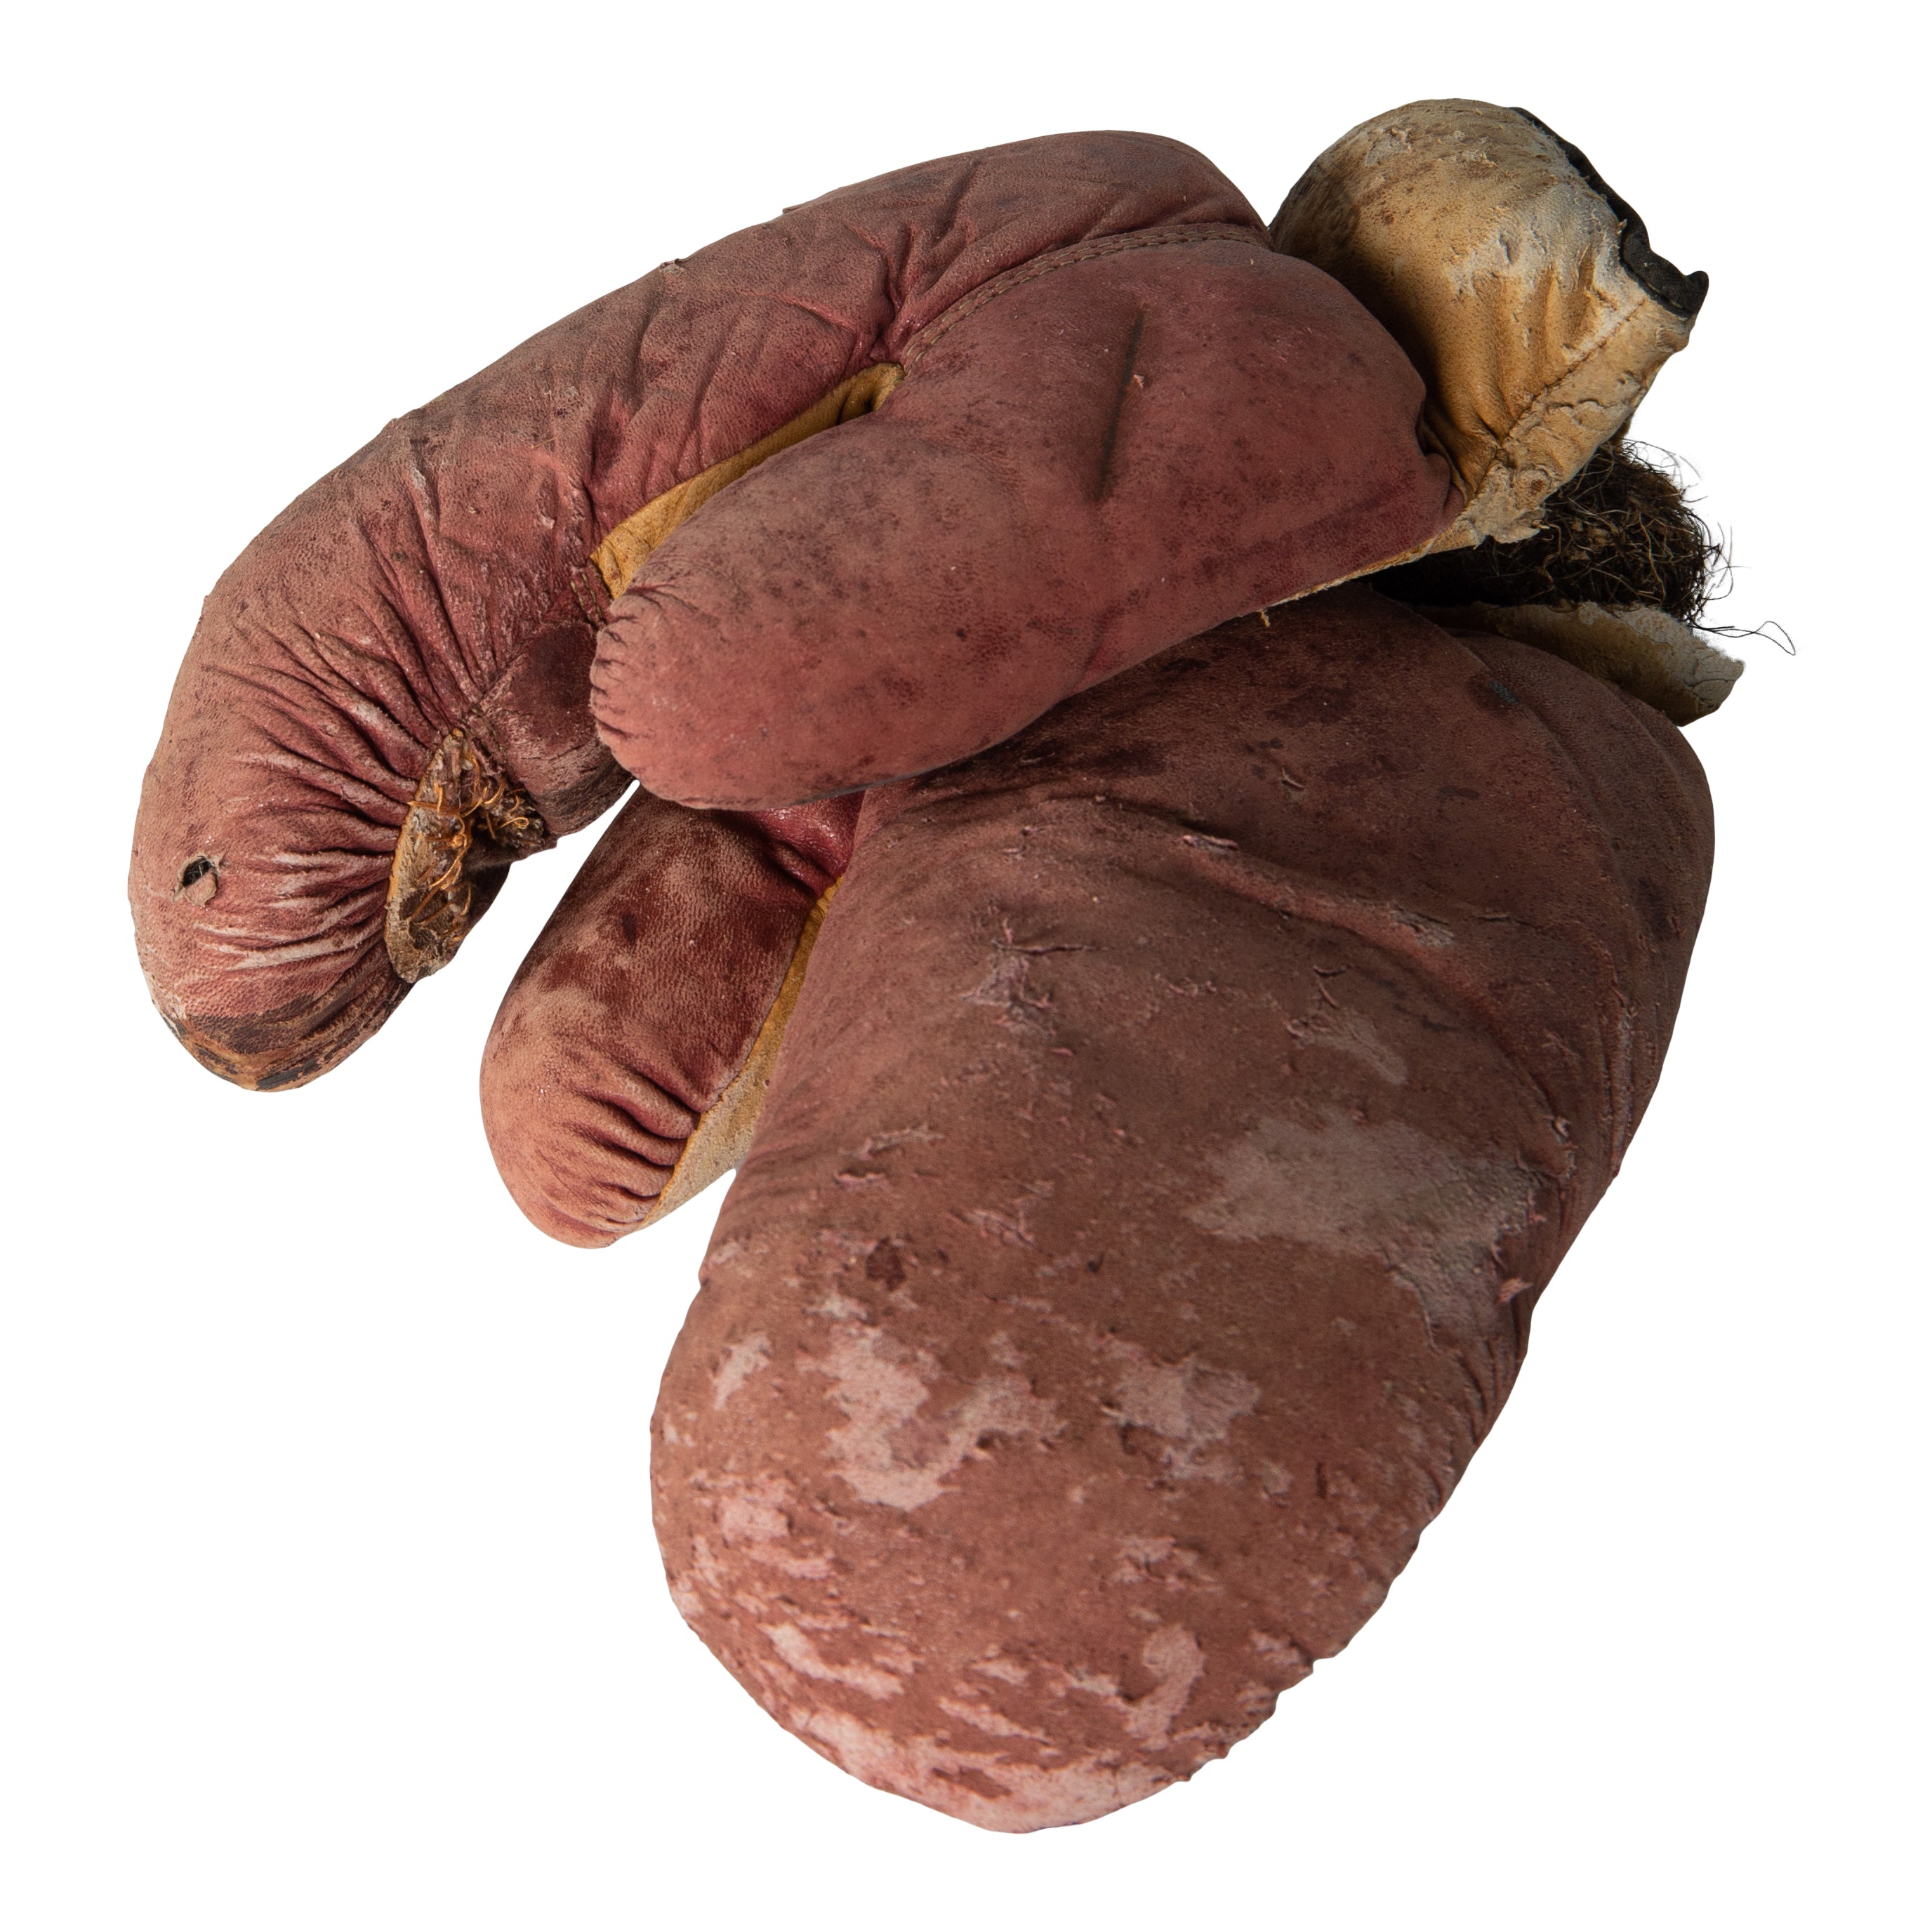 Muhammad Boxing Gloves (pair)